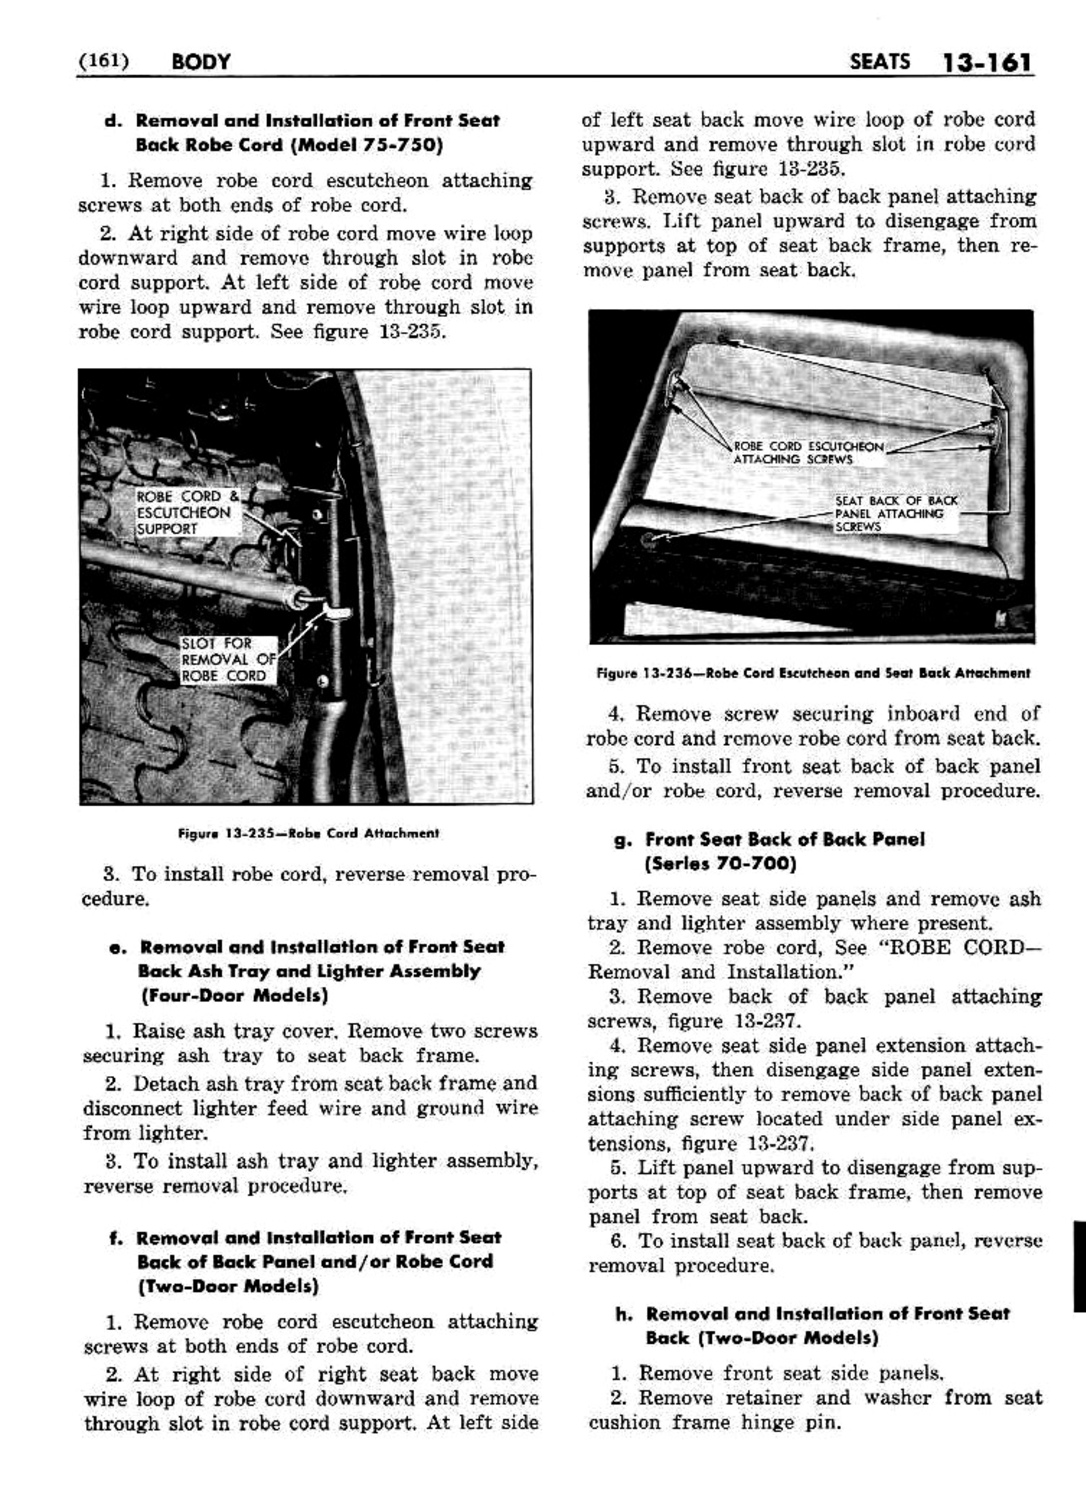 n_1958 Buick Body Service Manual-162-162.jpg